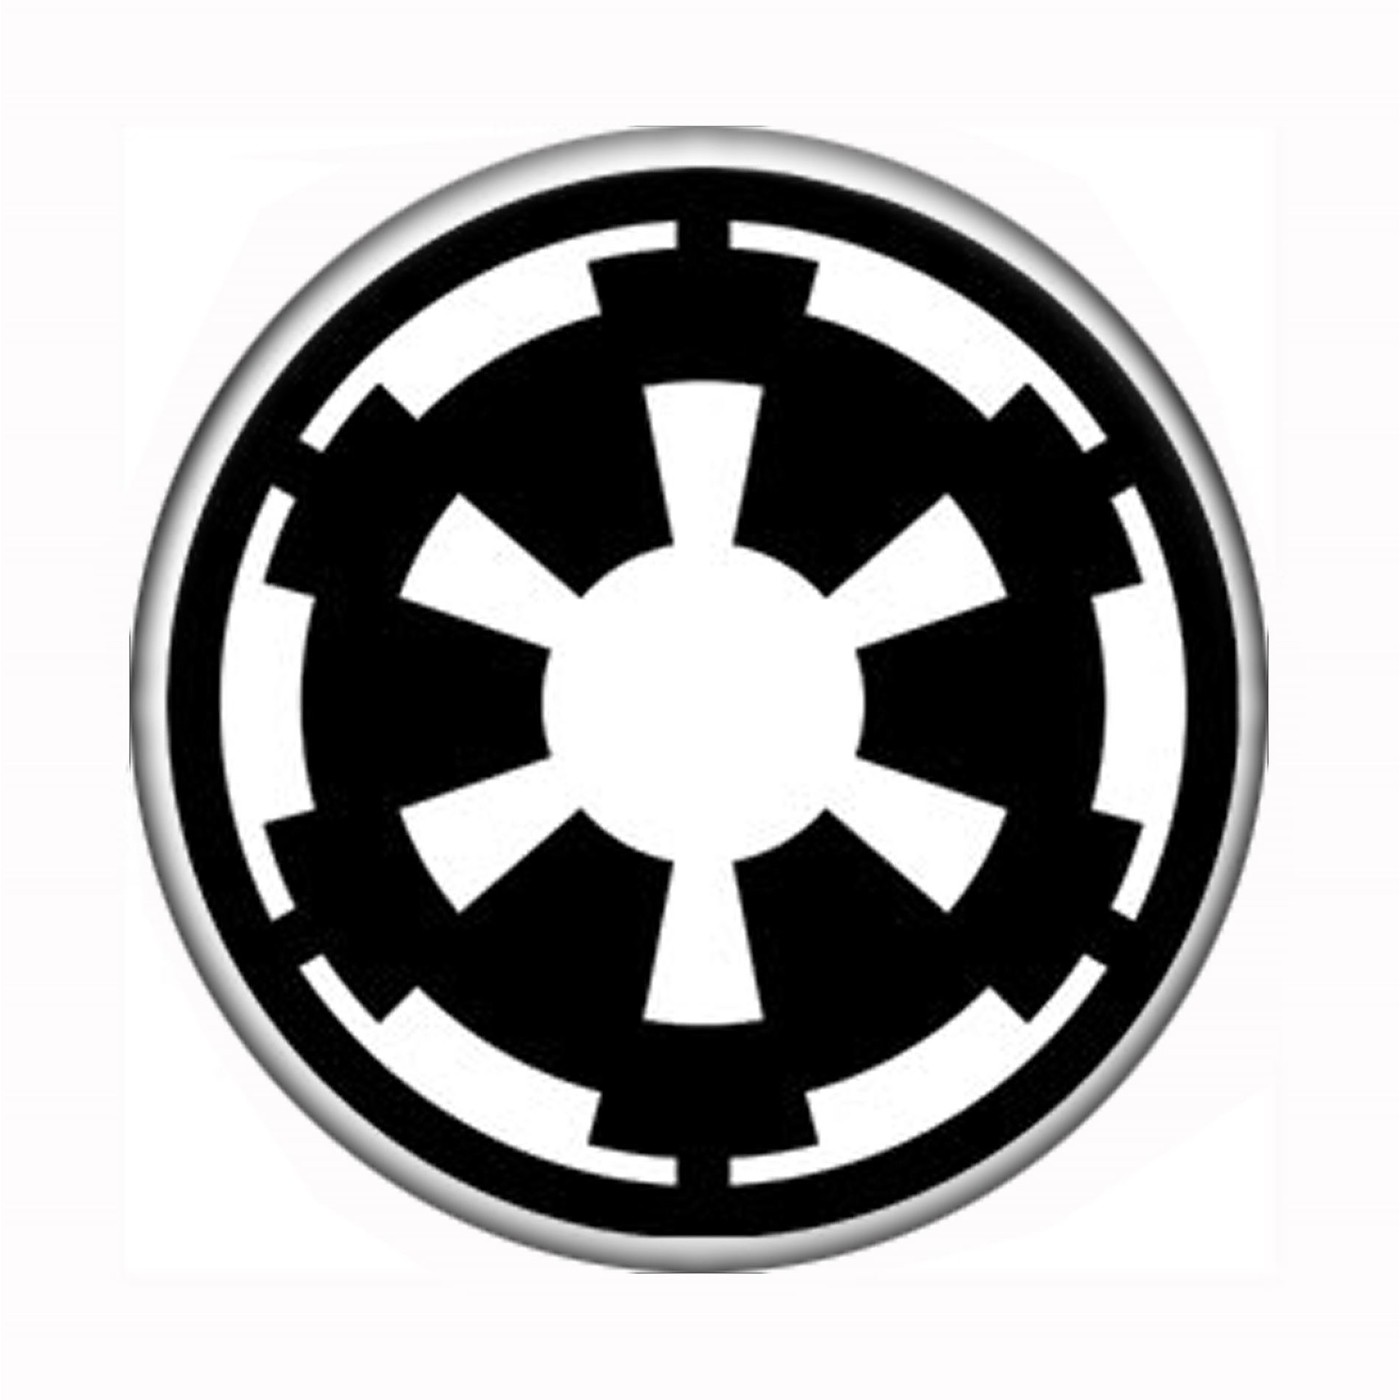 Star Wars Galactic Empire Sith Symbol Button